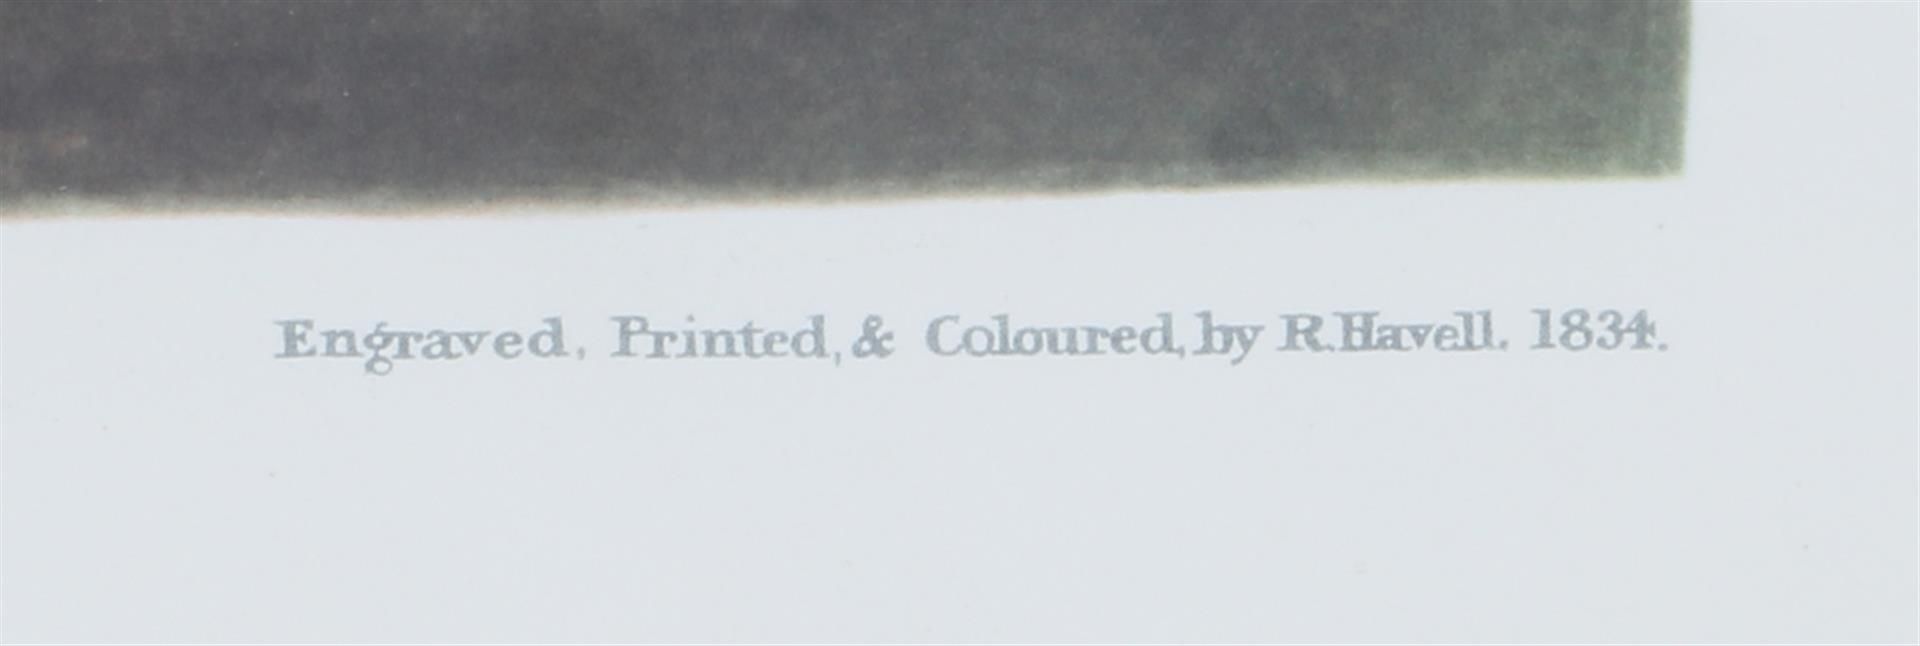 Engraved printed - Image 3 of 3